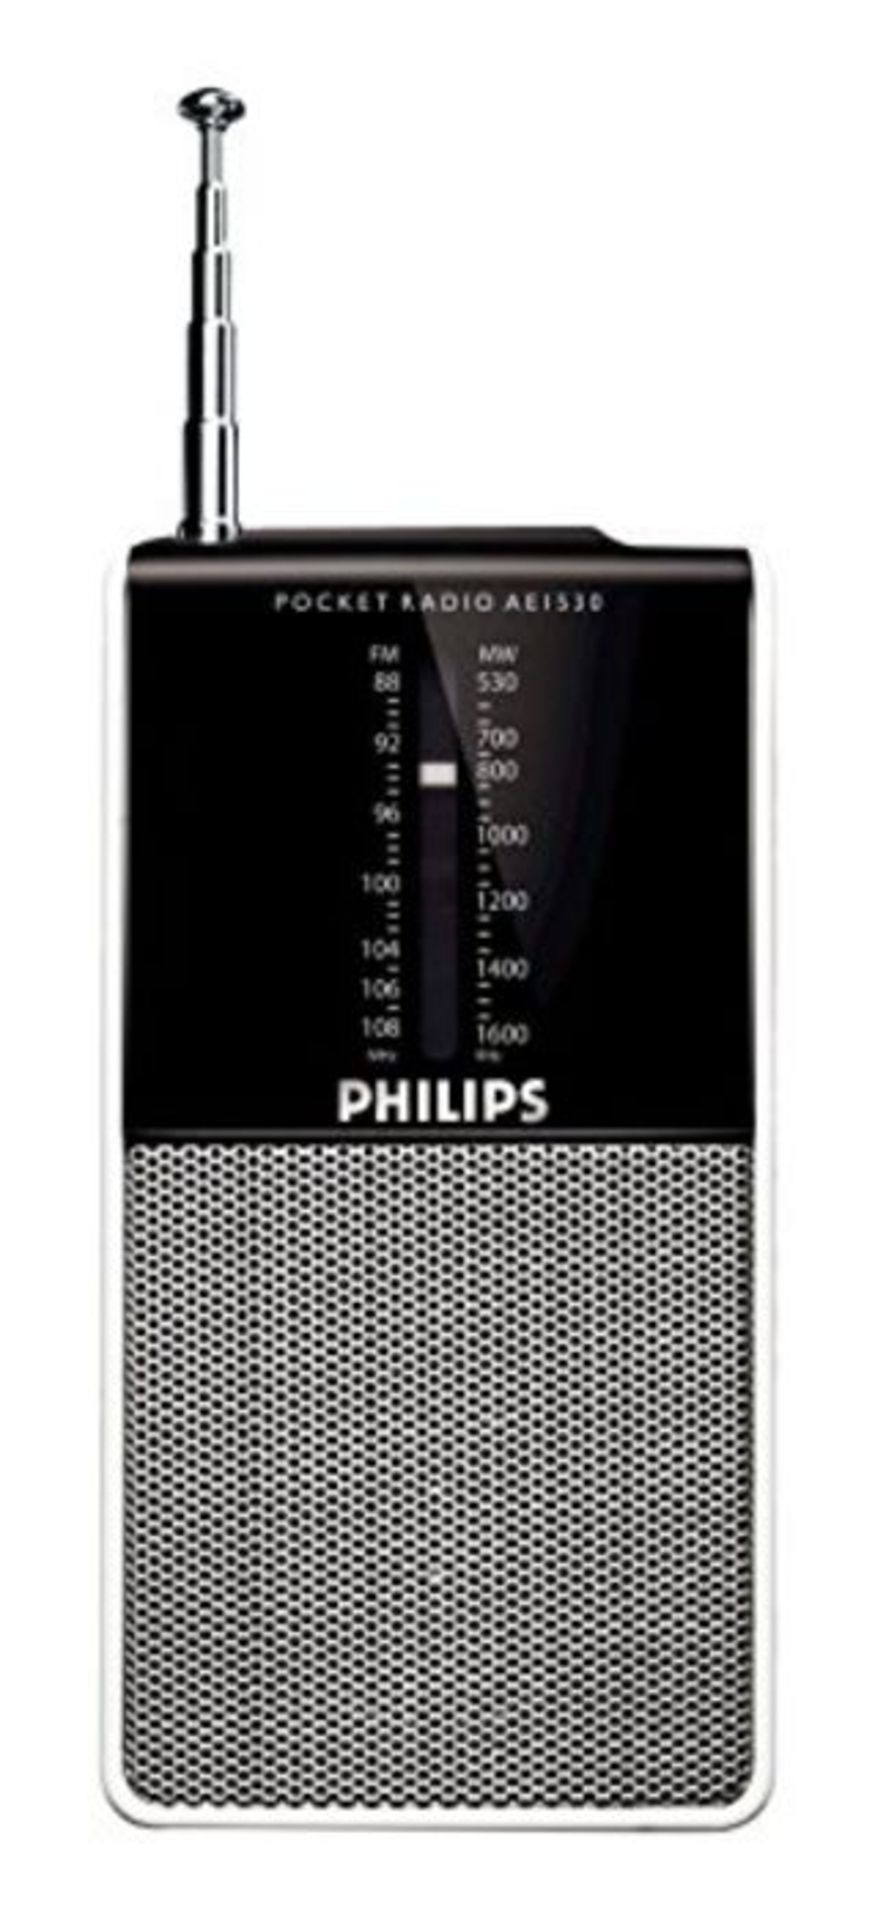 Philips AE 1530 Portable Radio